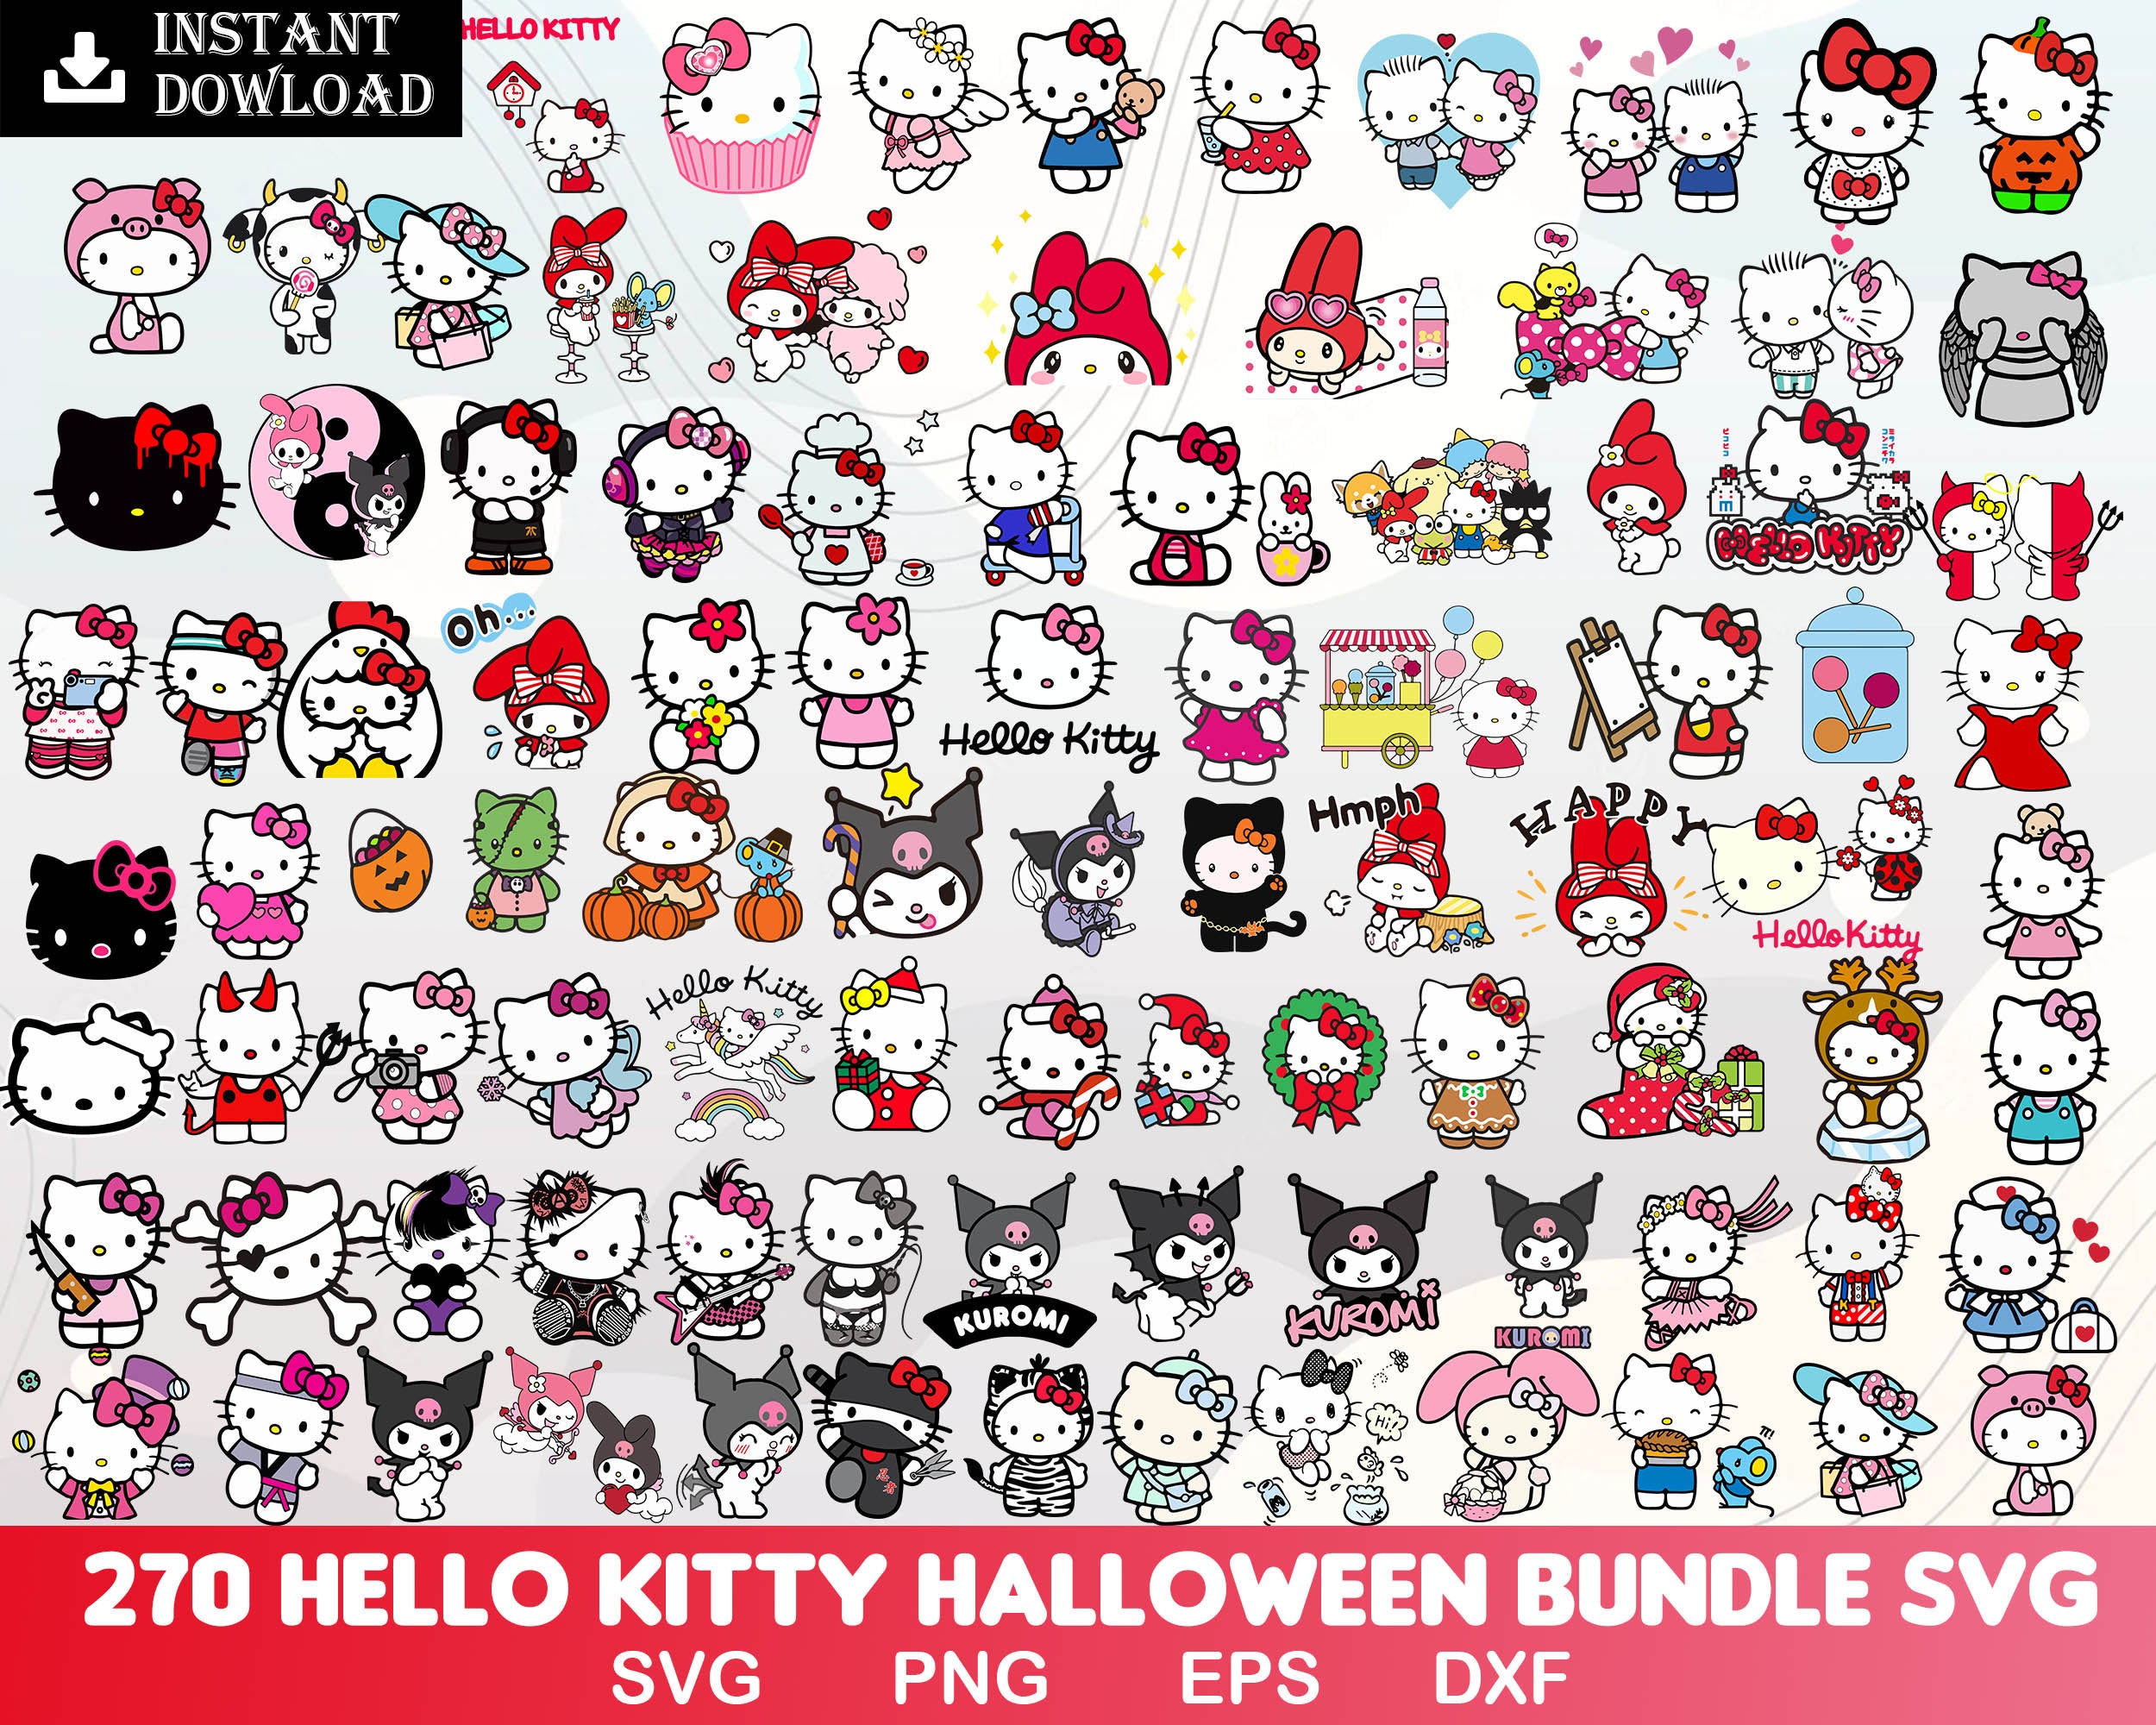 270+ Halloween Hello Kitty Bundle svg, Hello kitty halloween svg, eps, png, dxf, Horror kitty digital files.